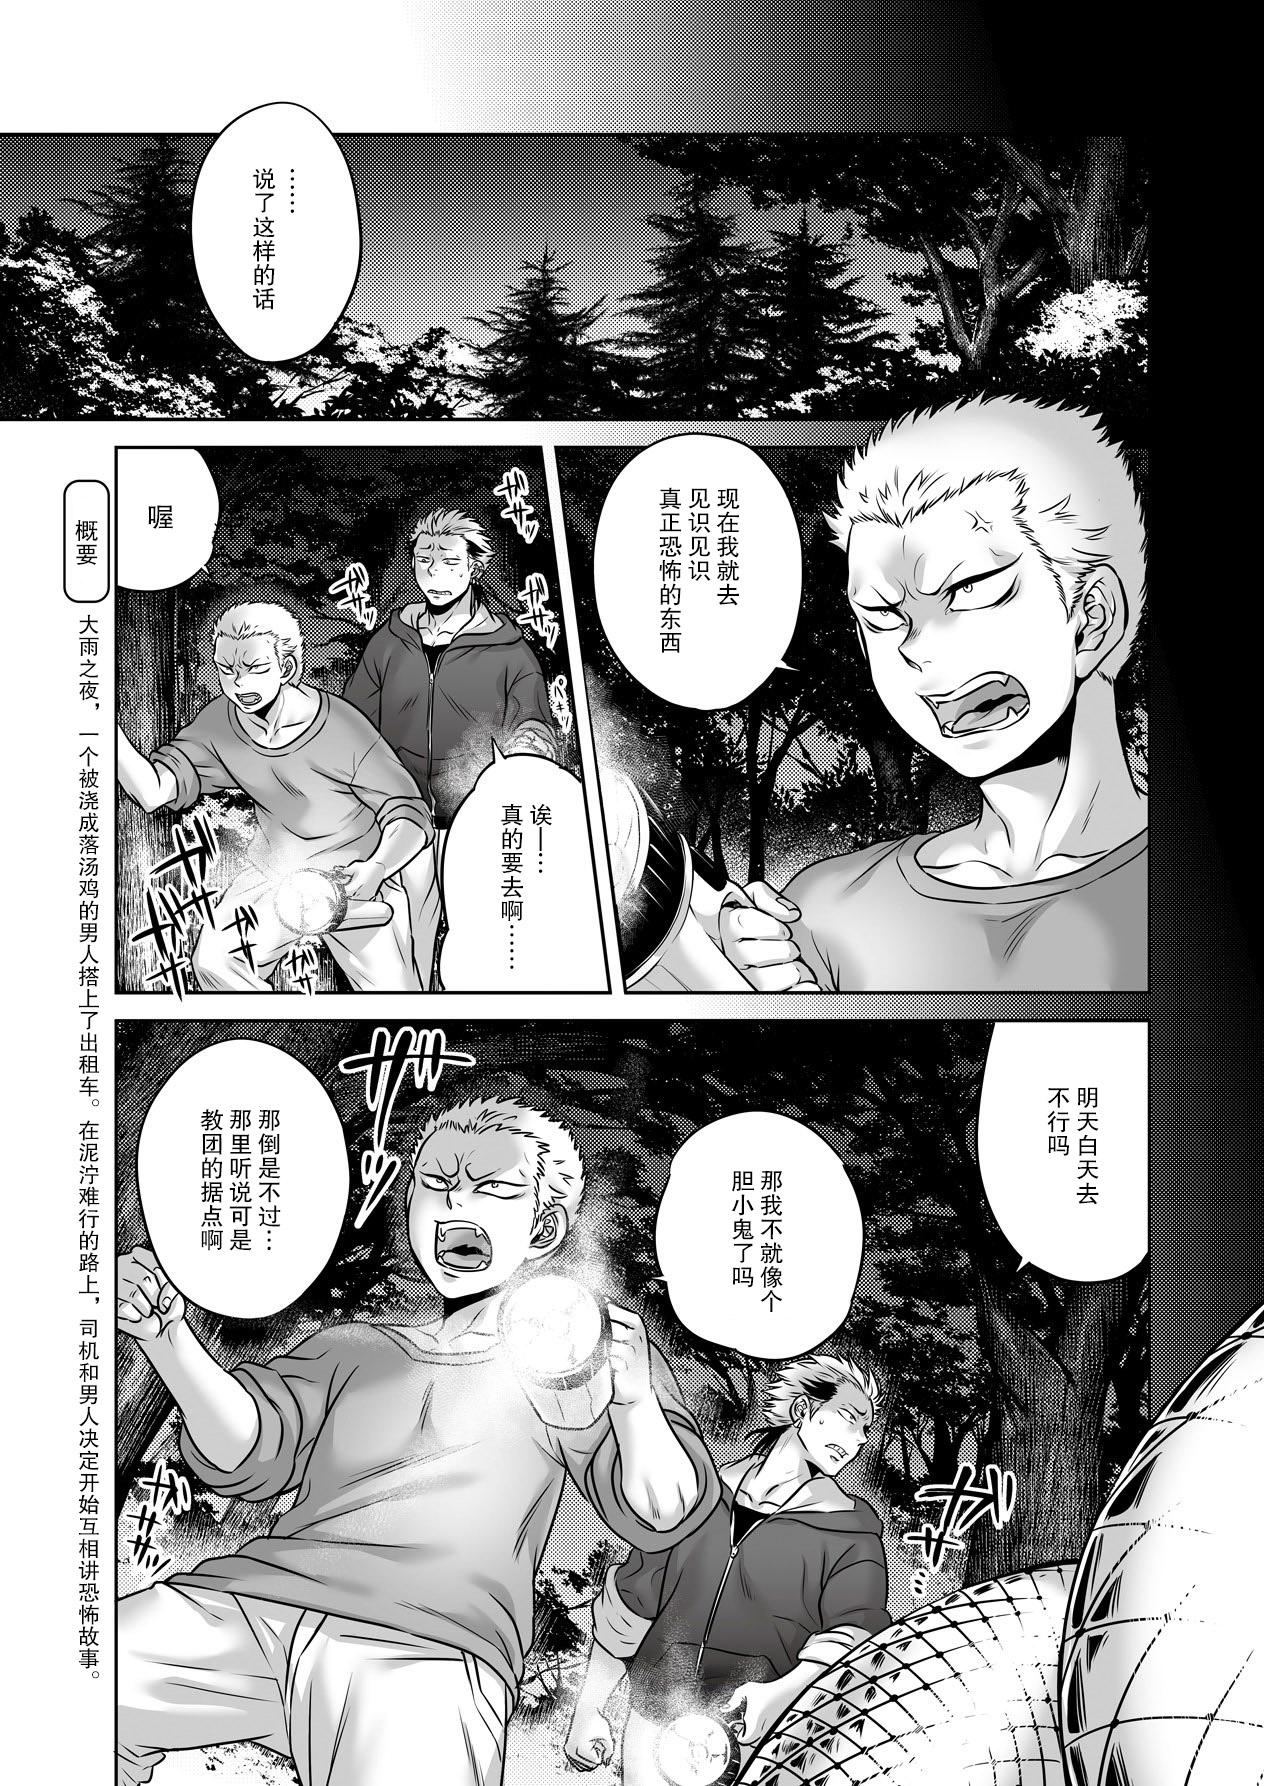 Socks Igyou Kaikitan "Kankandara" | Wonderfully Grotesque Mystery - Kankandara Group - Page 3